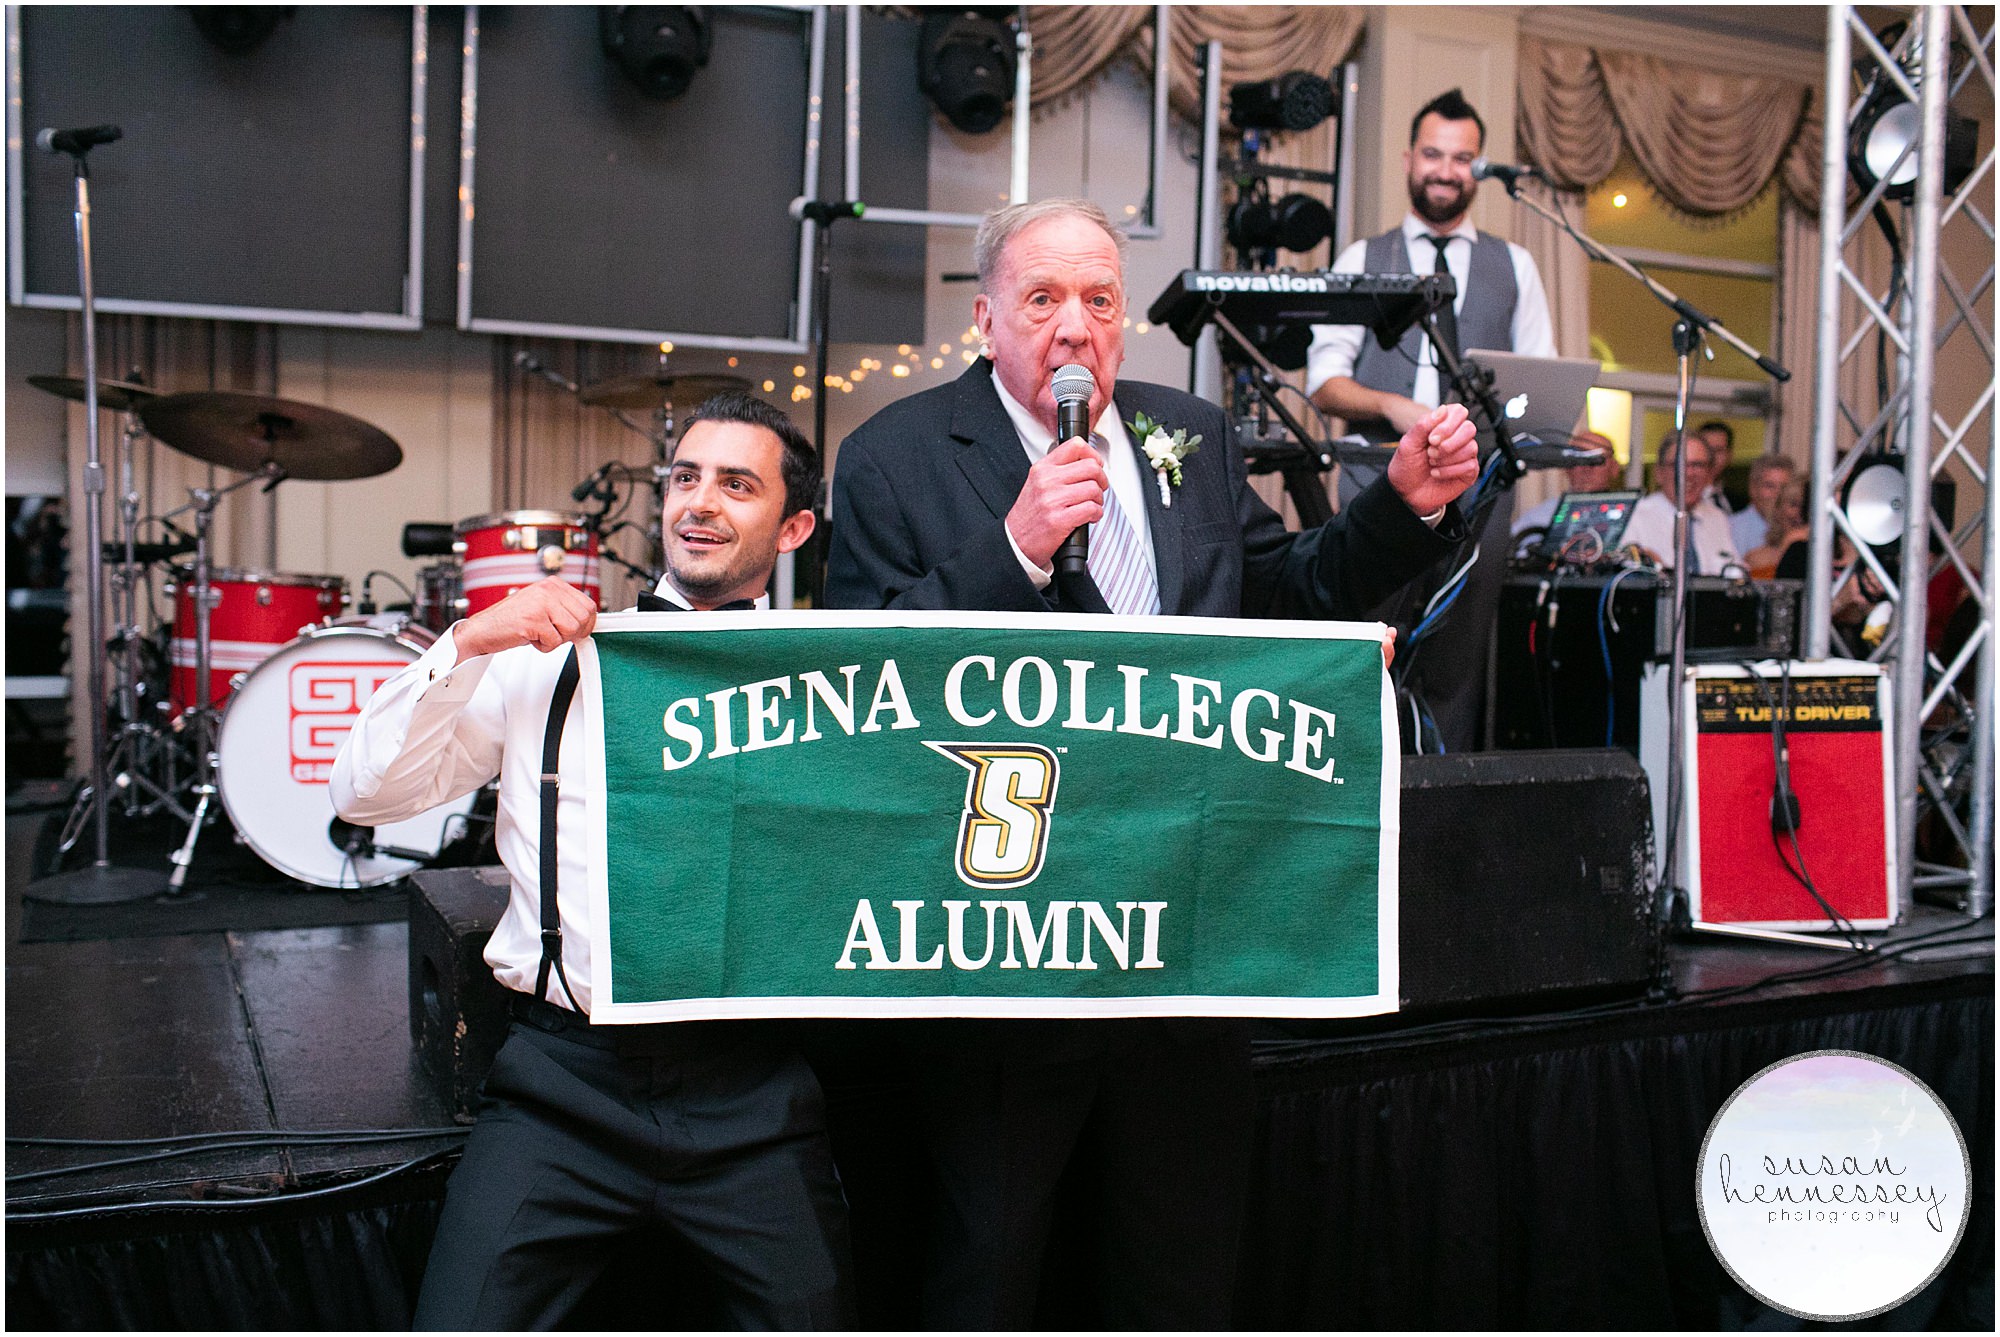 Siena college alumni at wedding